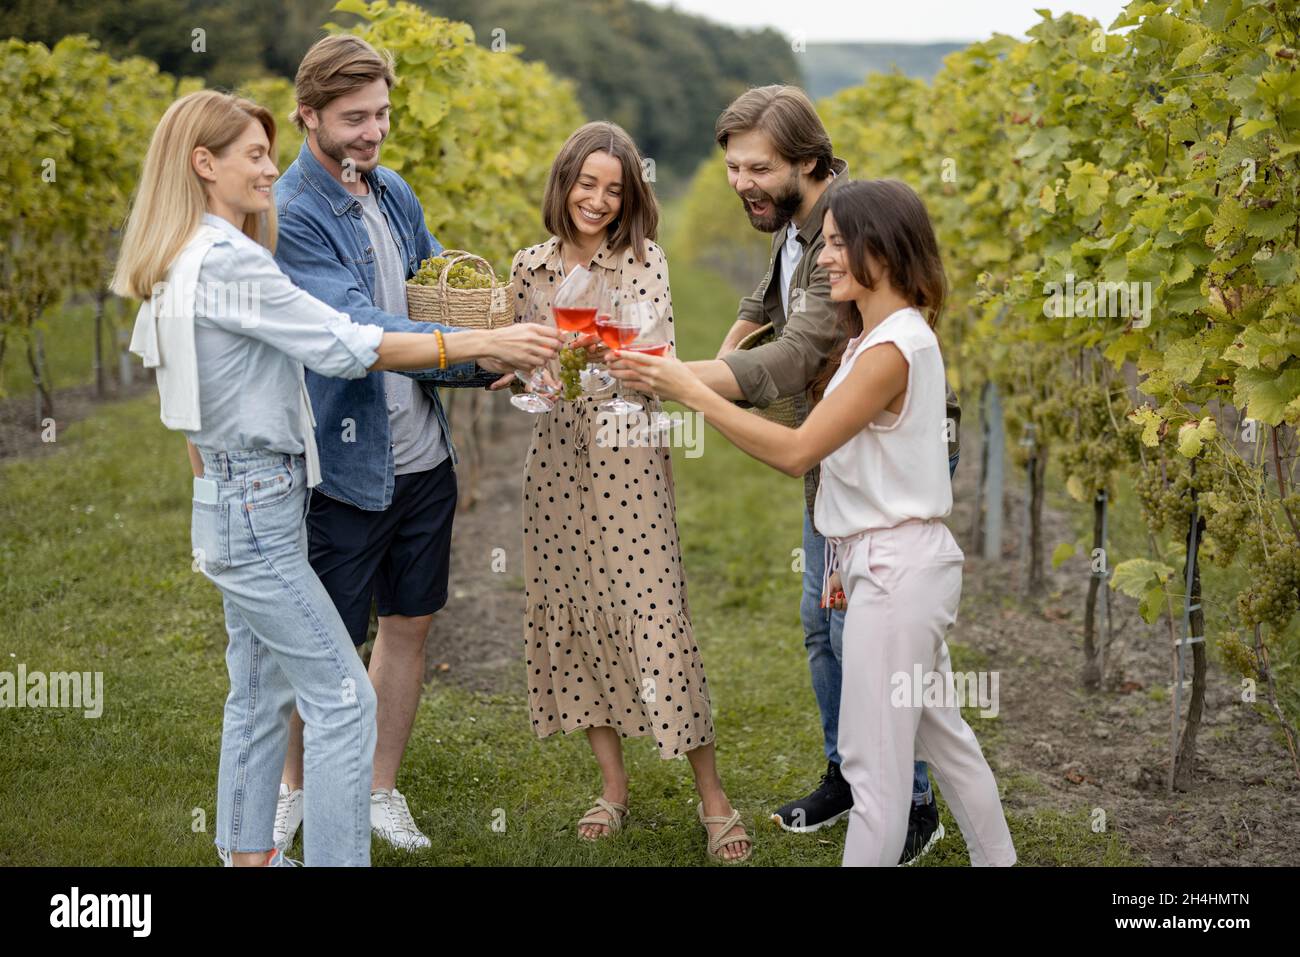 Friends tasting wine near vineyards in countryside Stock Photo